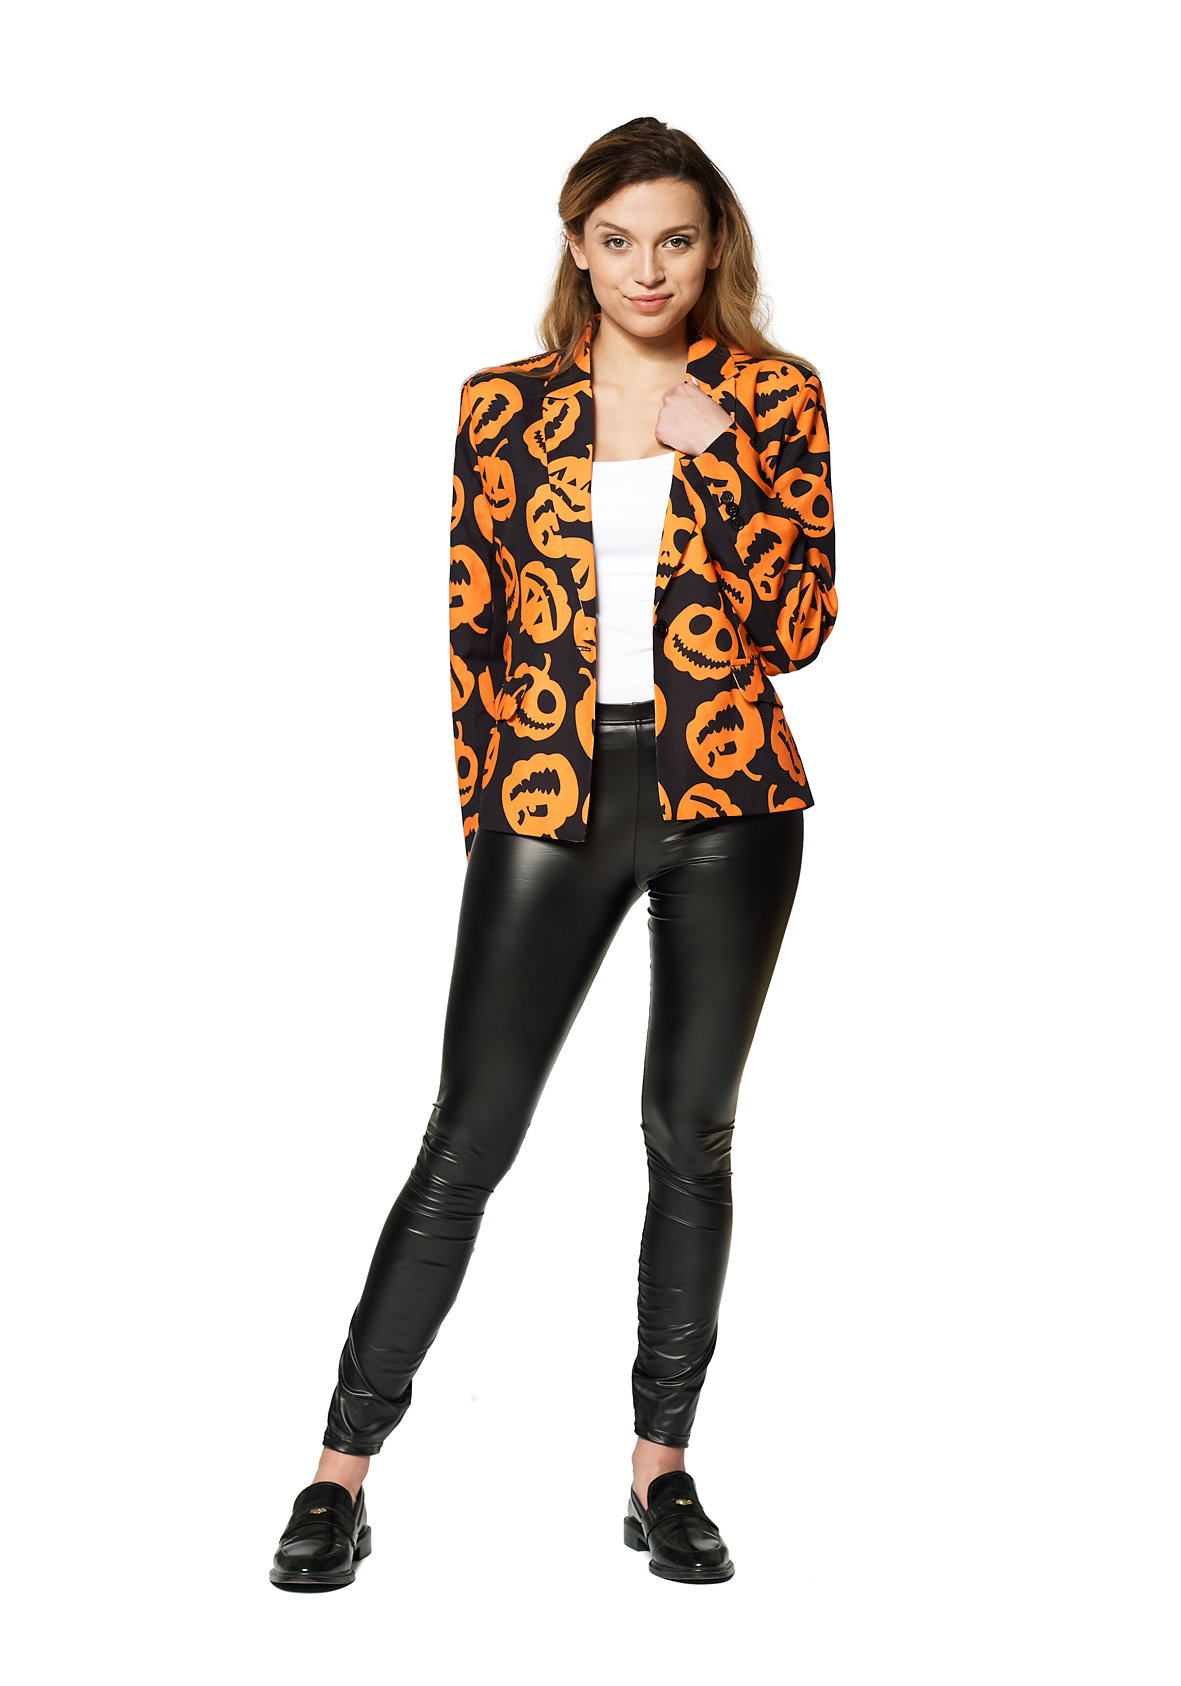 Adult Women's Pumpkin Jacket by Spirit Halloween